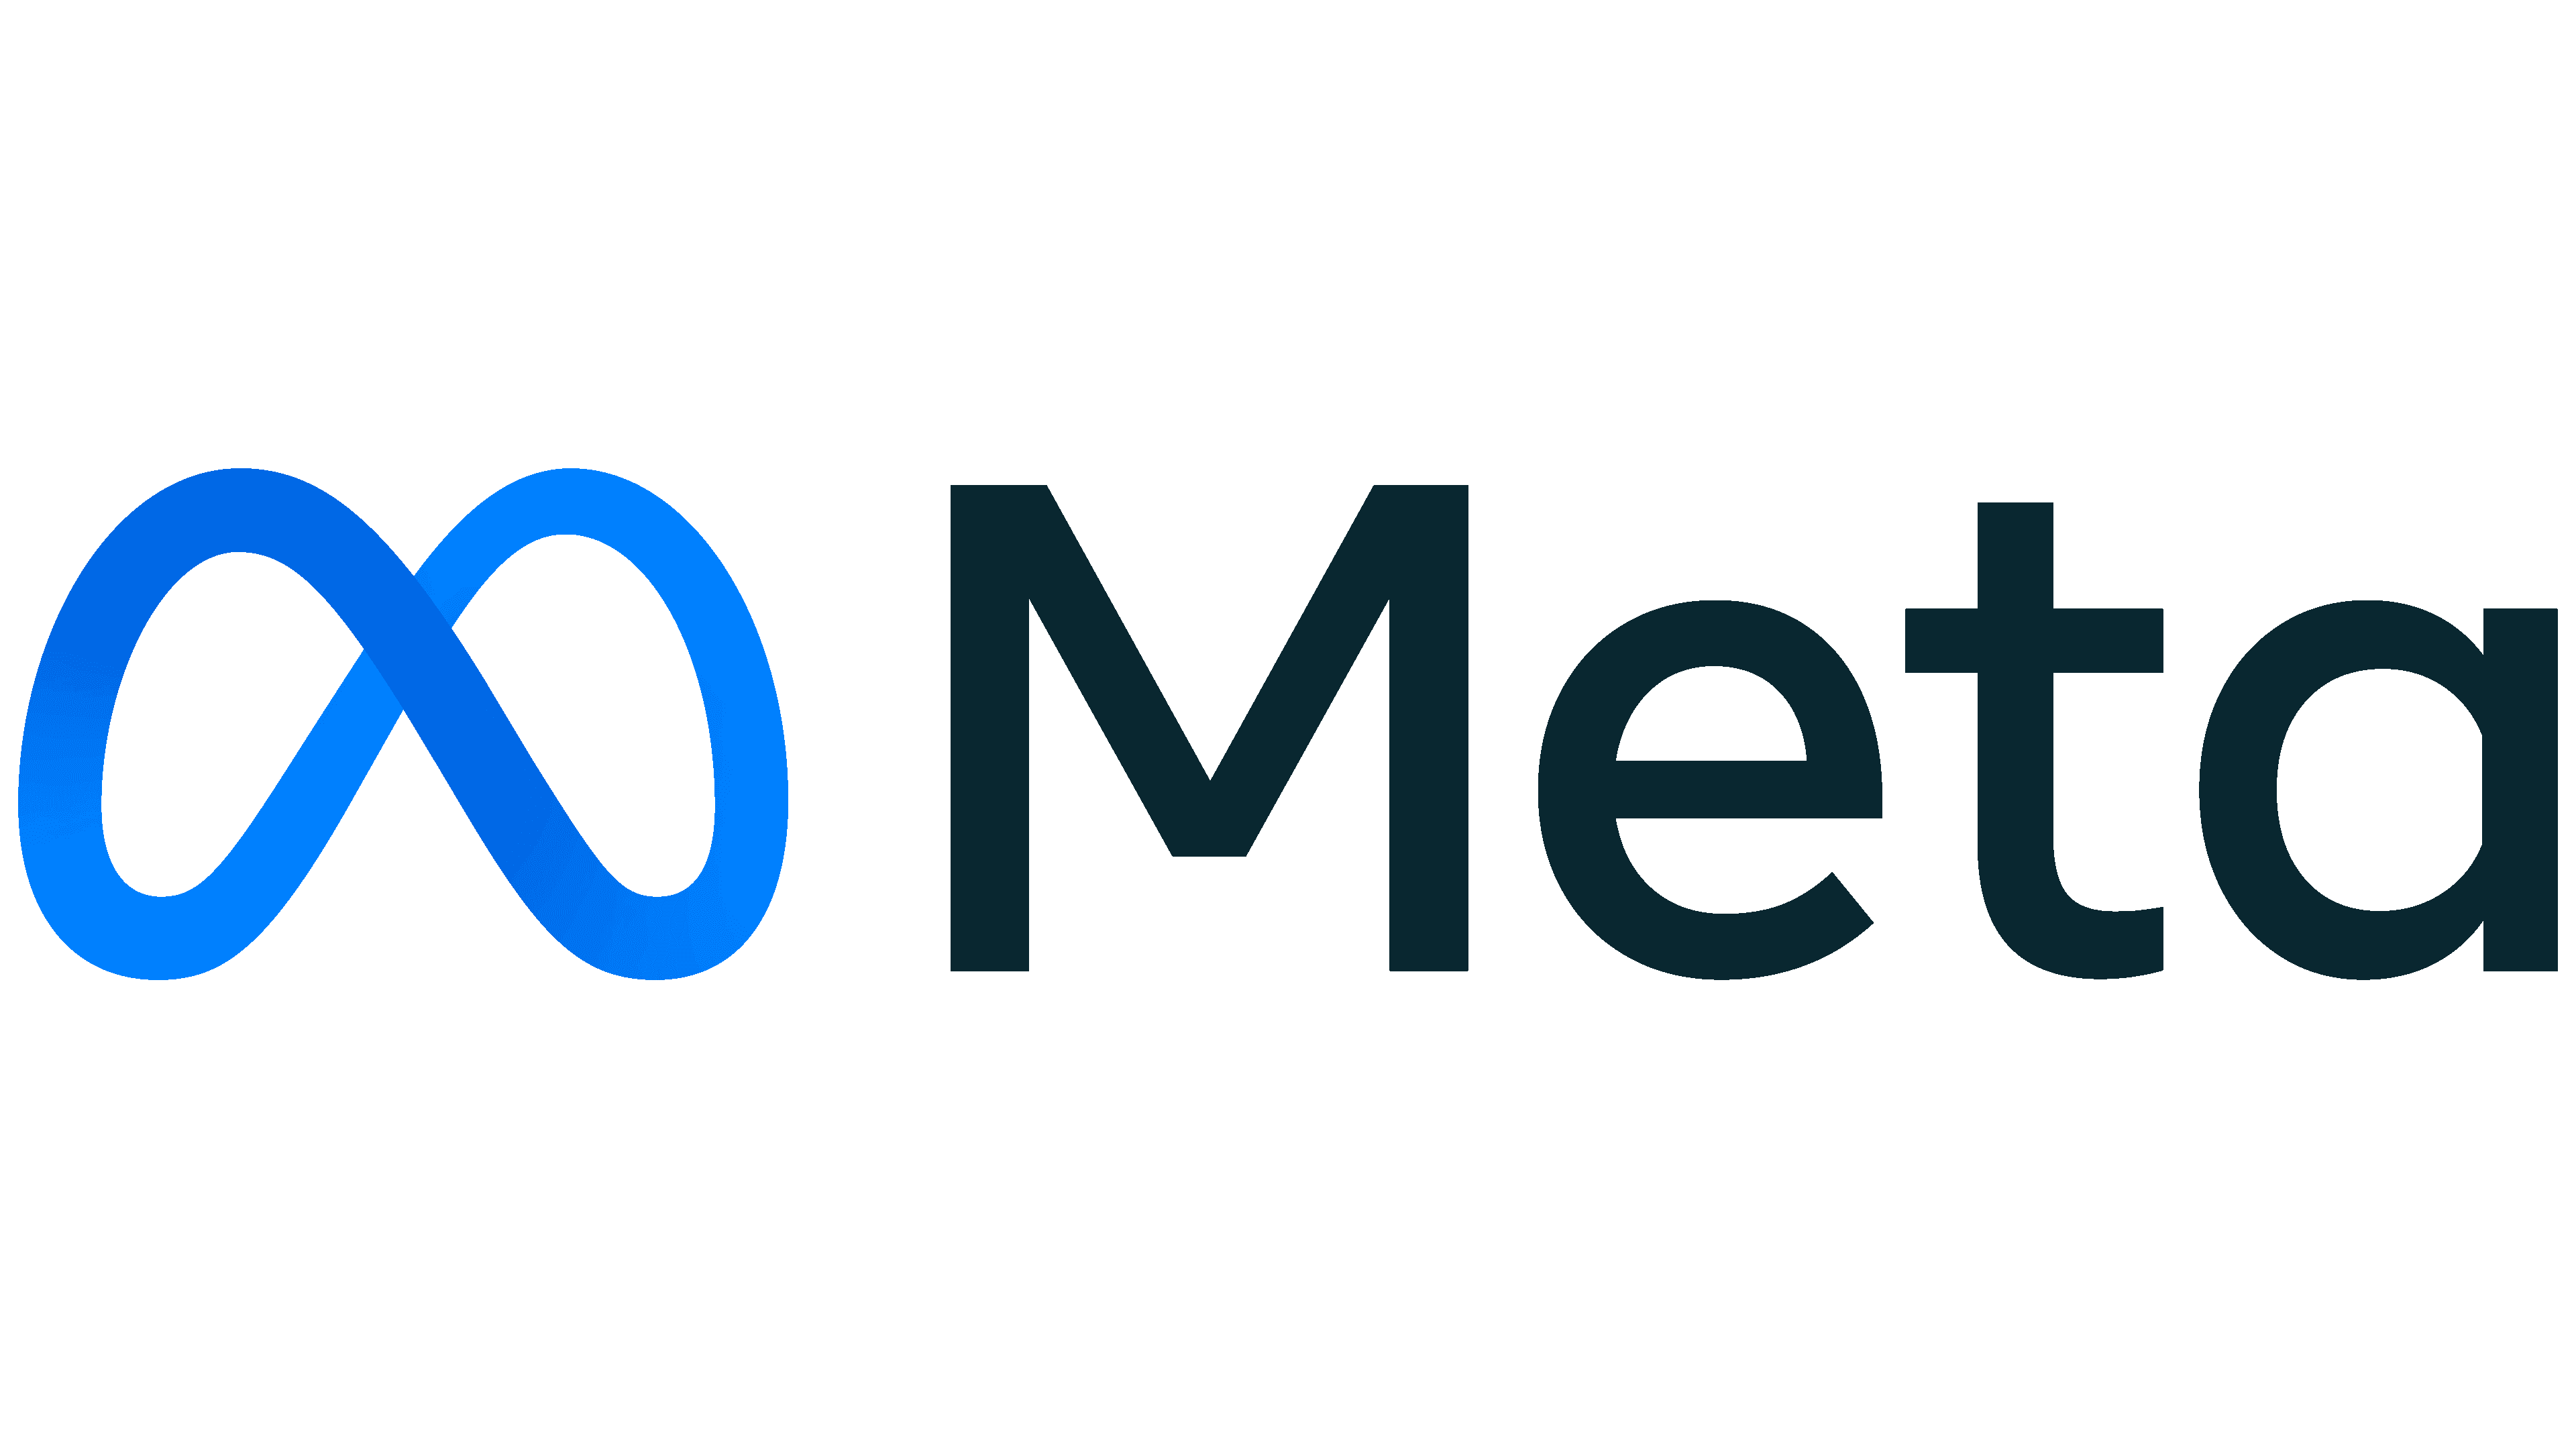 2 Meta-facebook-Logo